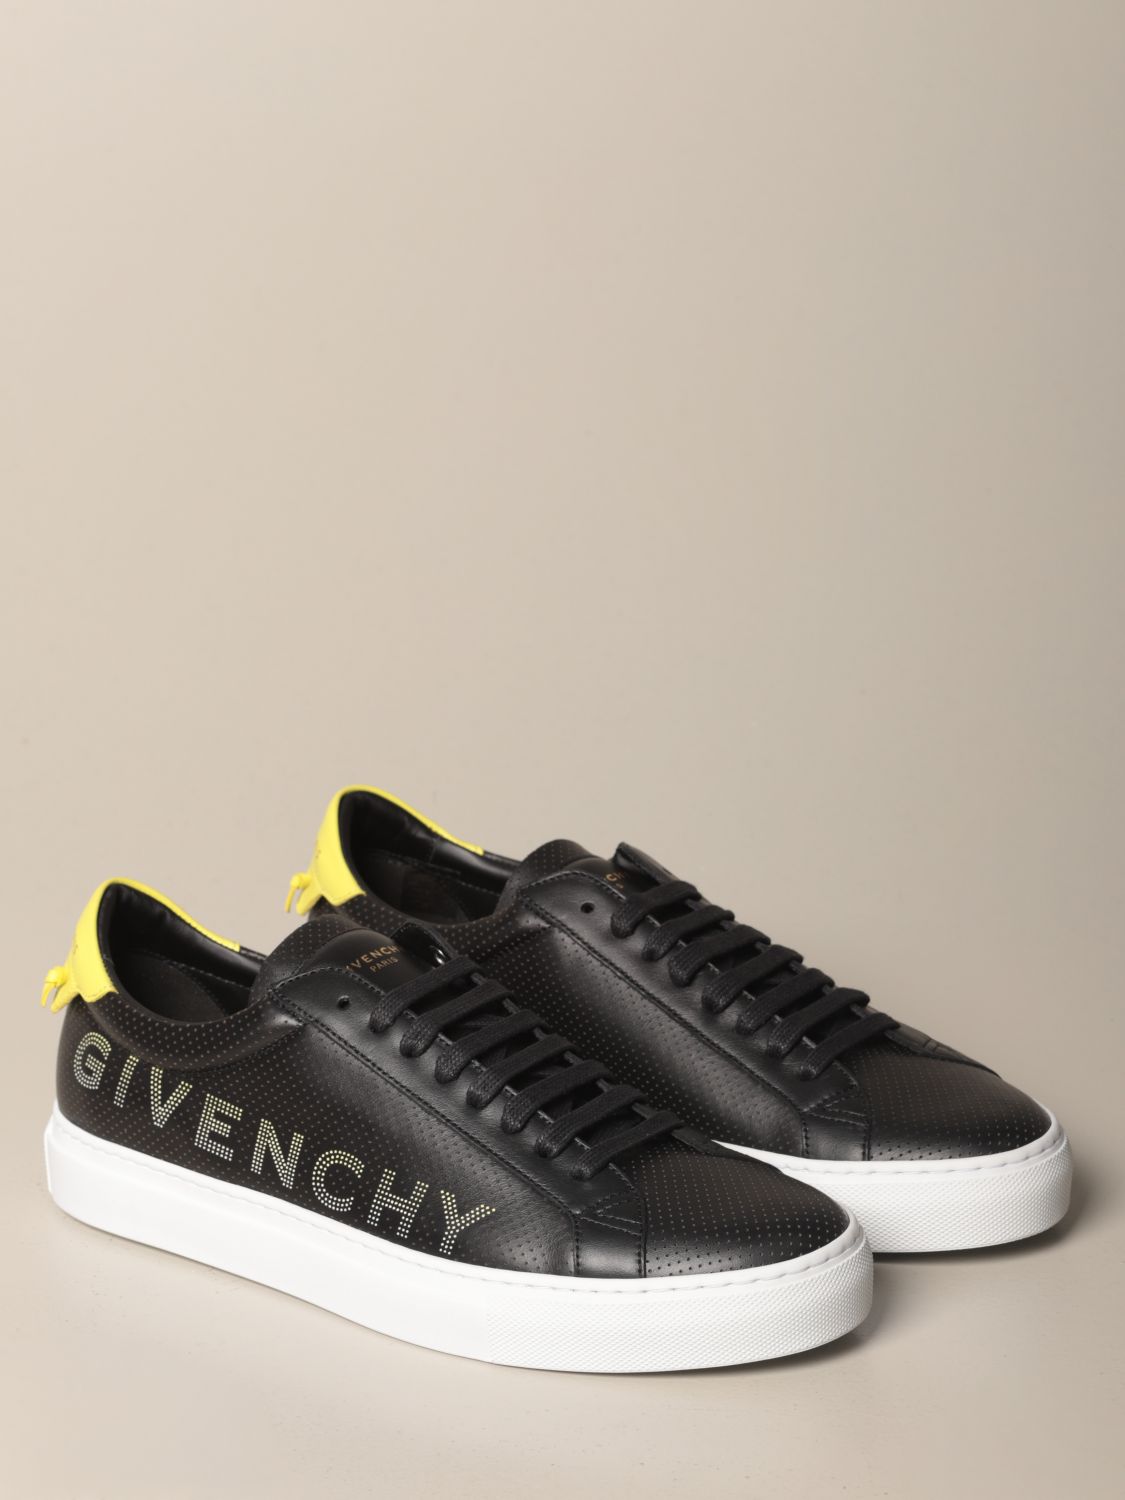 Schuhe Herren Givenchy Sneakers Givenchy Herren Schwarz Sneakers Givenchy Bh0002h0nx Giglio De